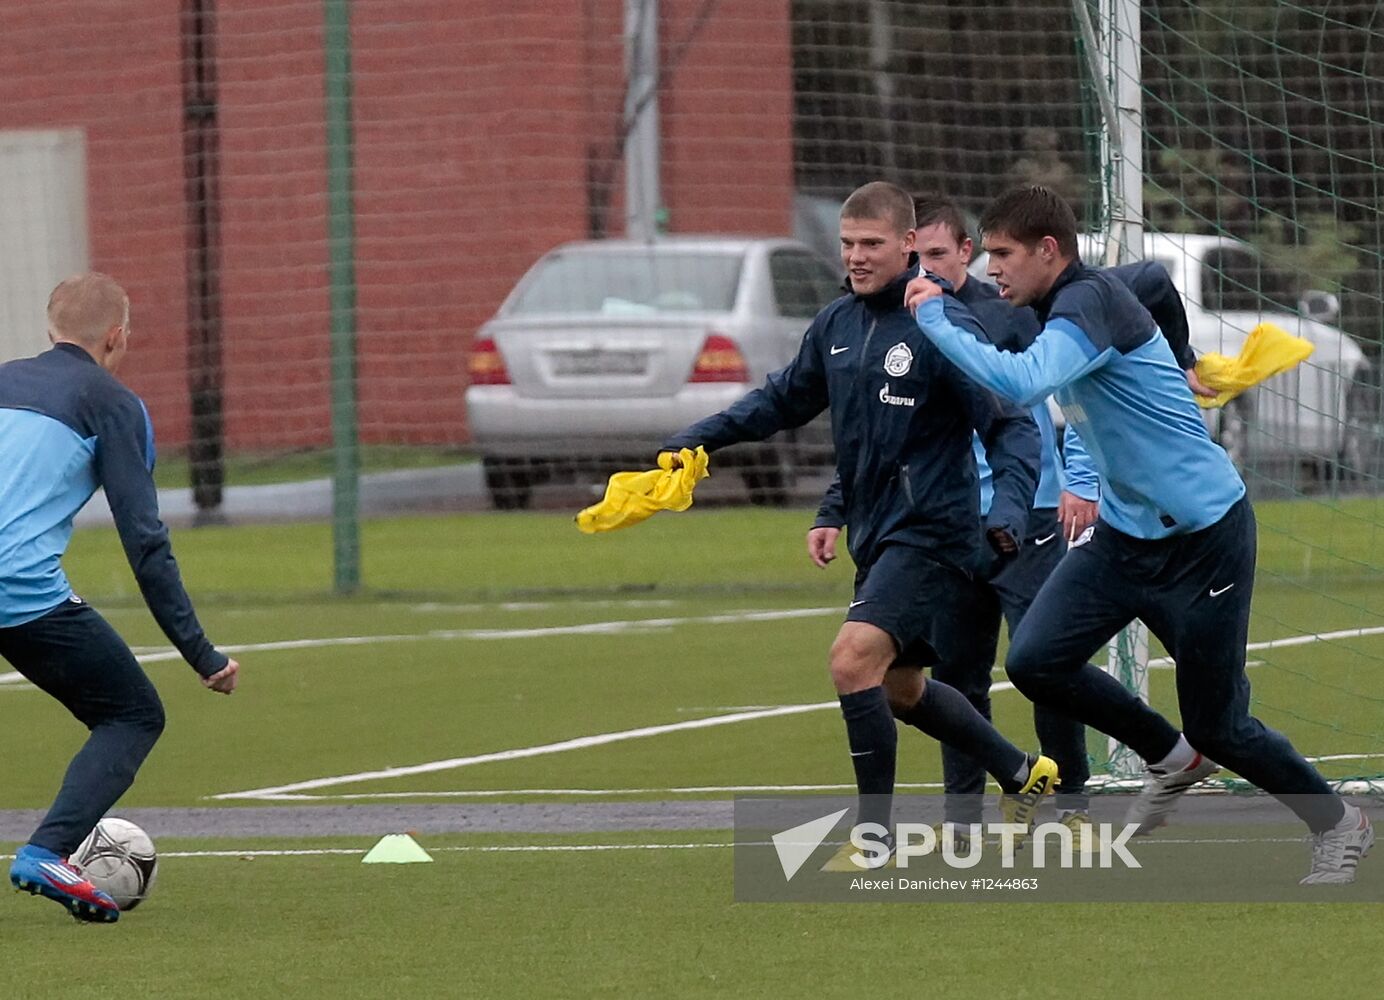 Football. Kerzhakov, Denisov transferred to reserve squad